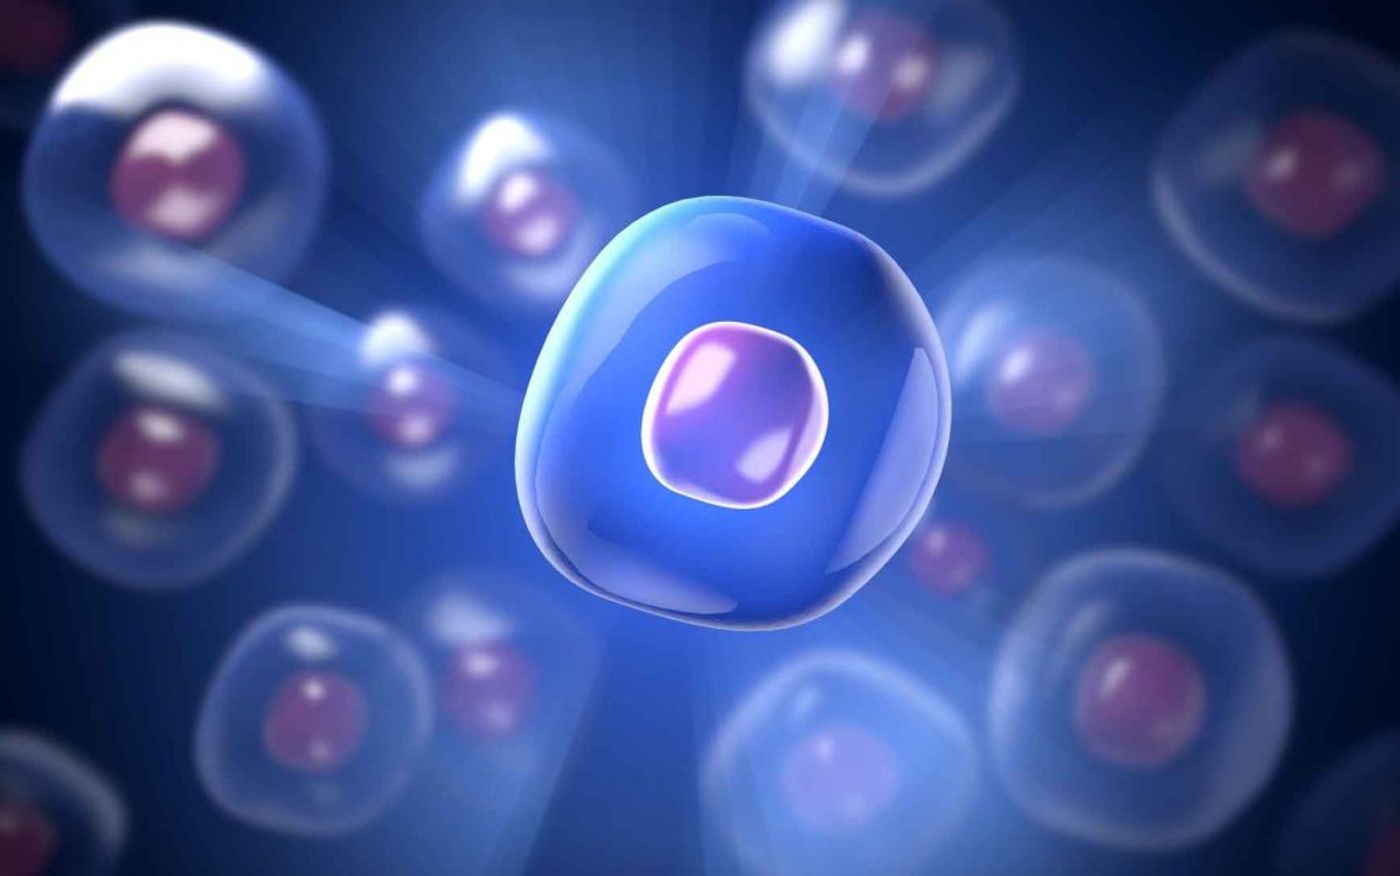 An illustration of immune stem cells. Credit: SEPCELL